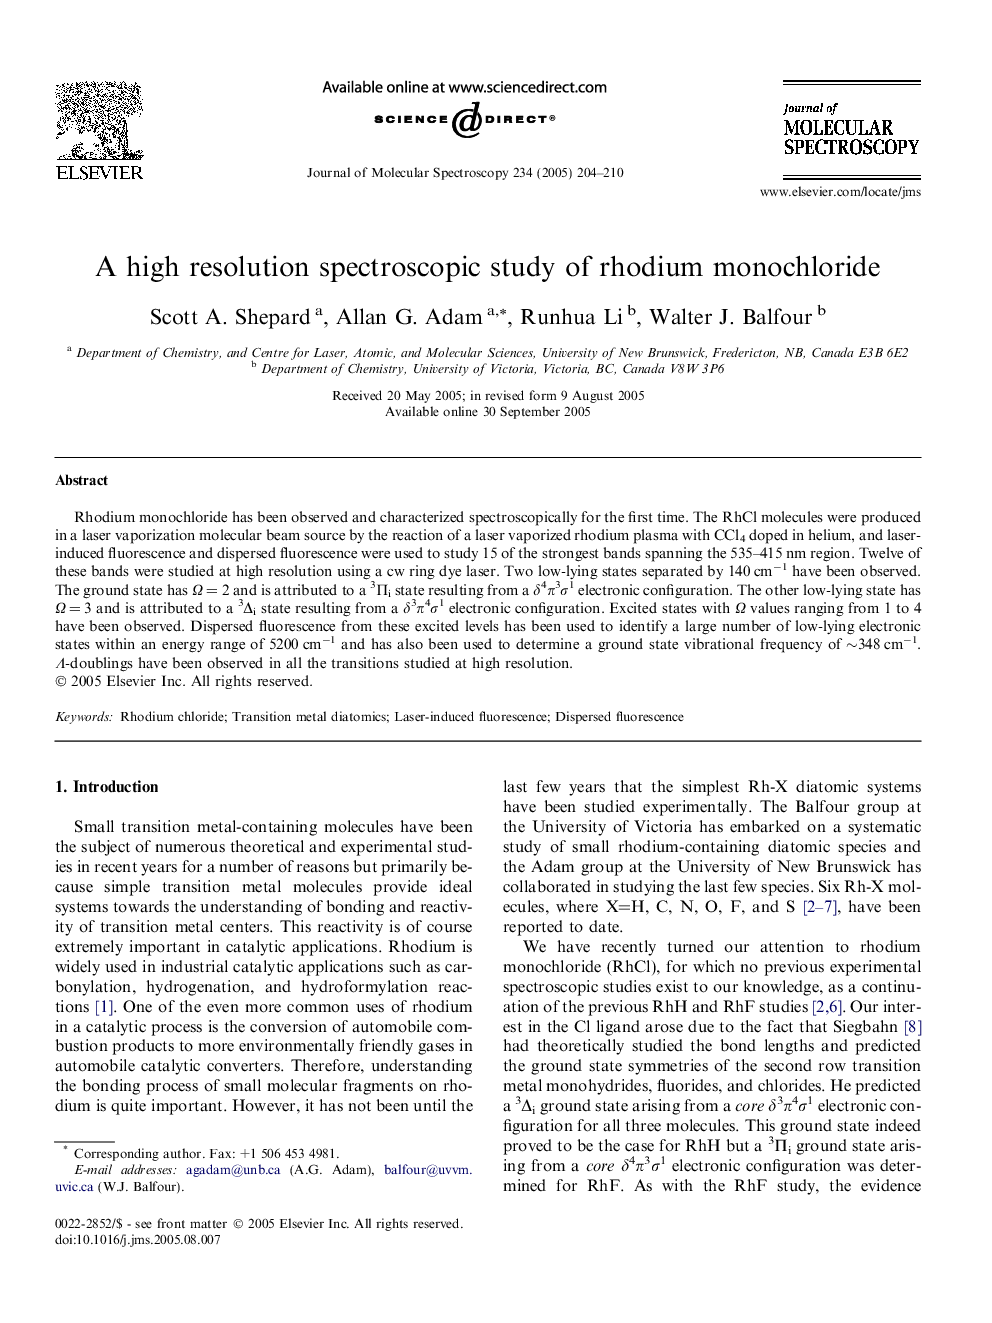 A high resolution spectroscopic study of rhodium monochloride